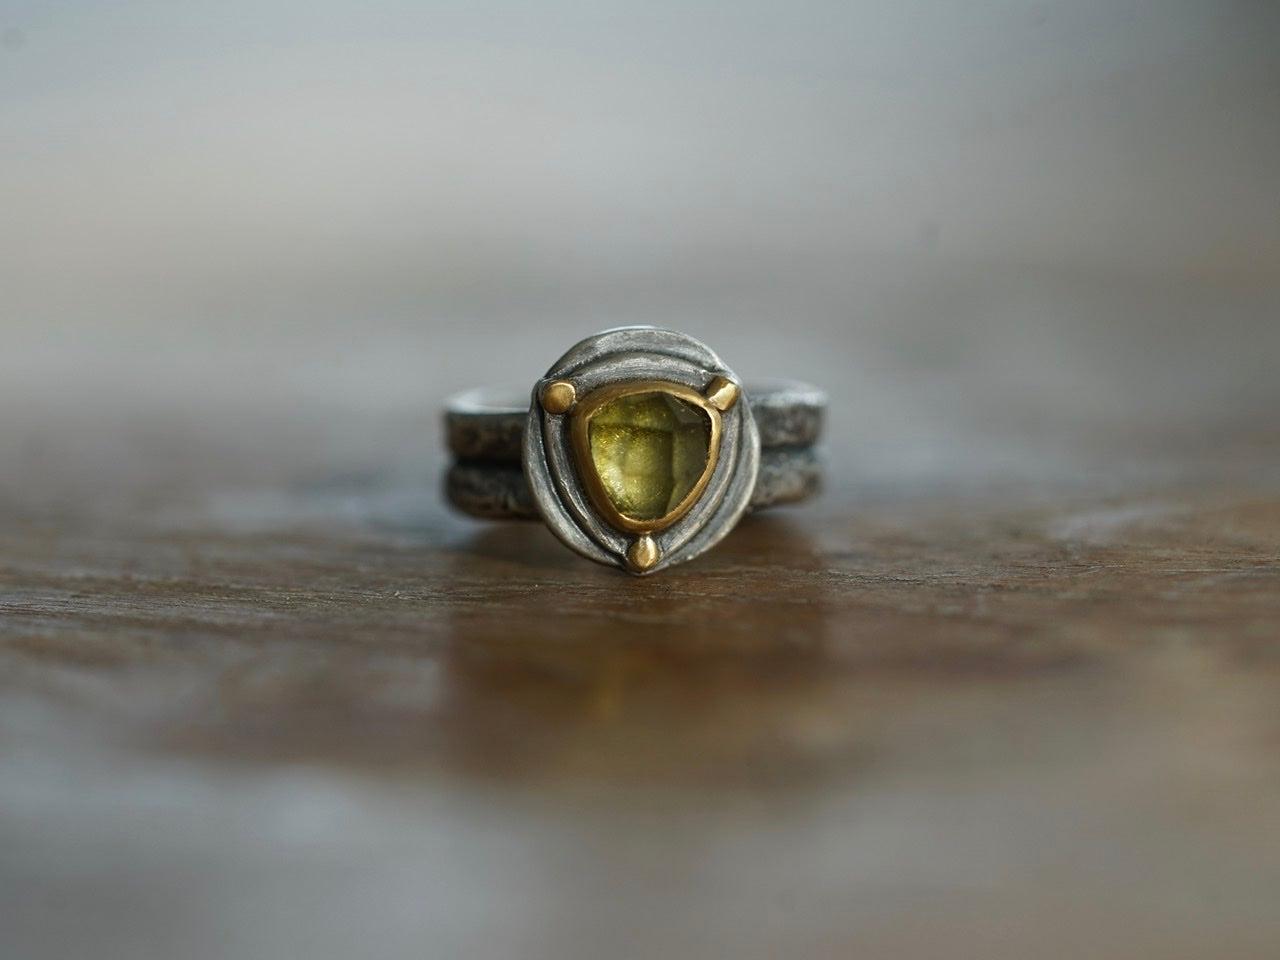 Triangular green tourmaline and 22k gold ring, size 6.25